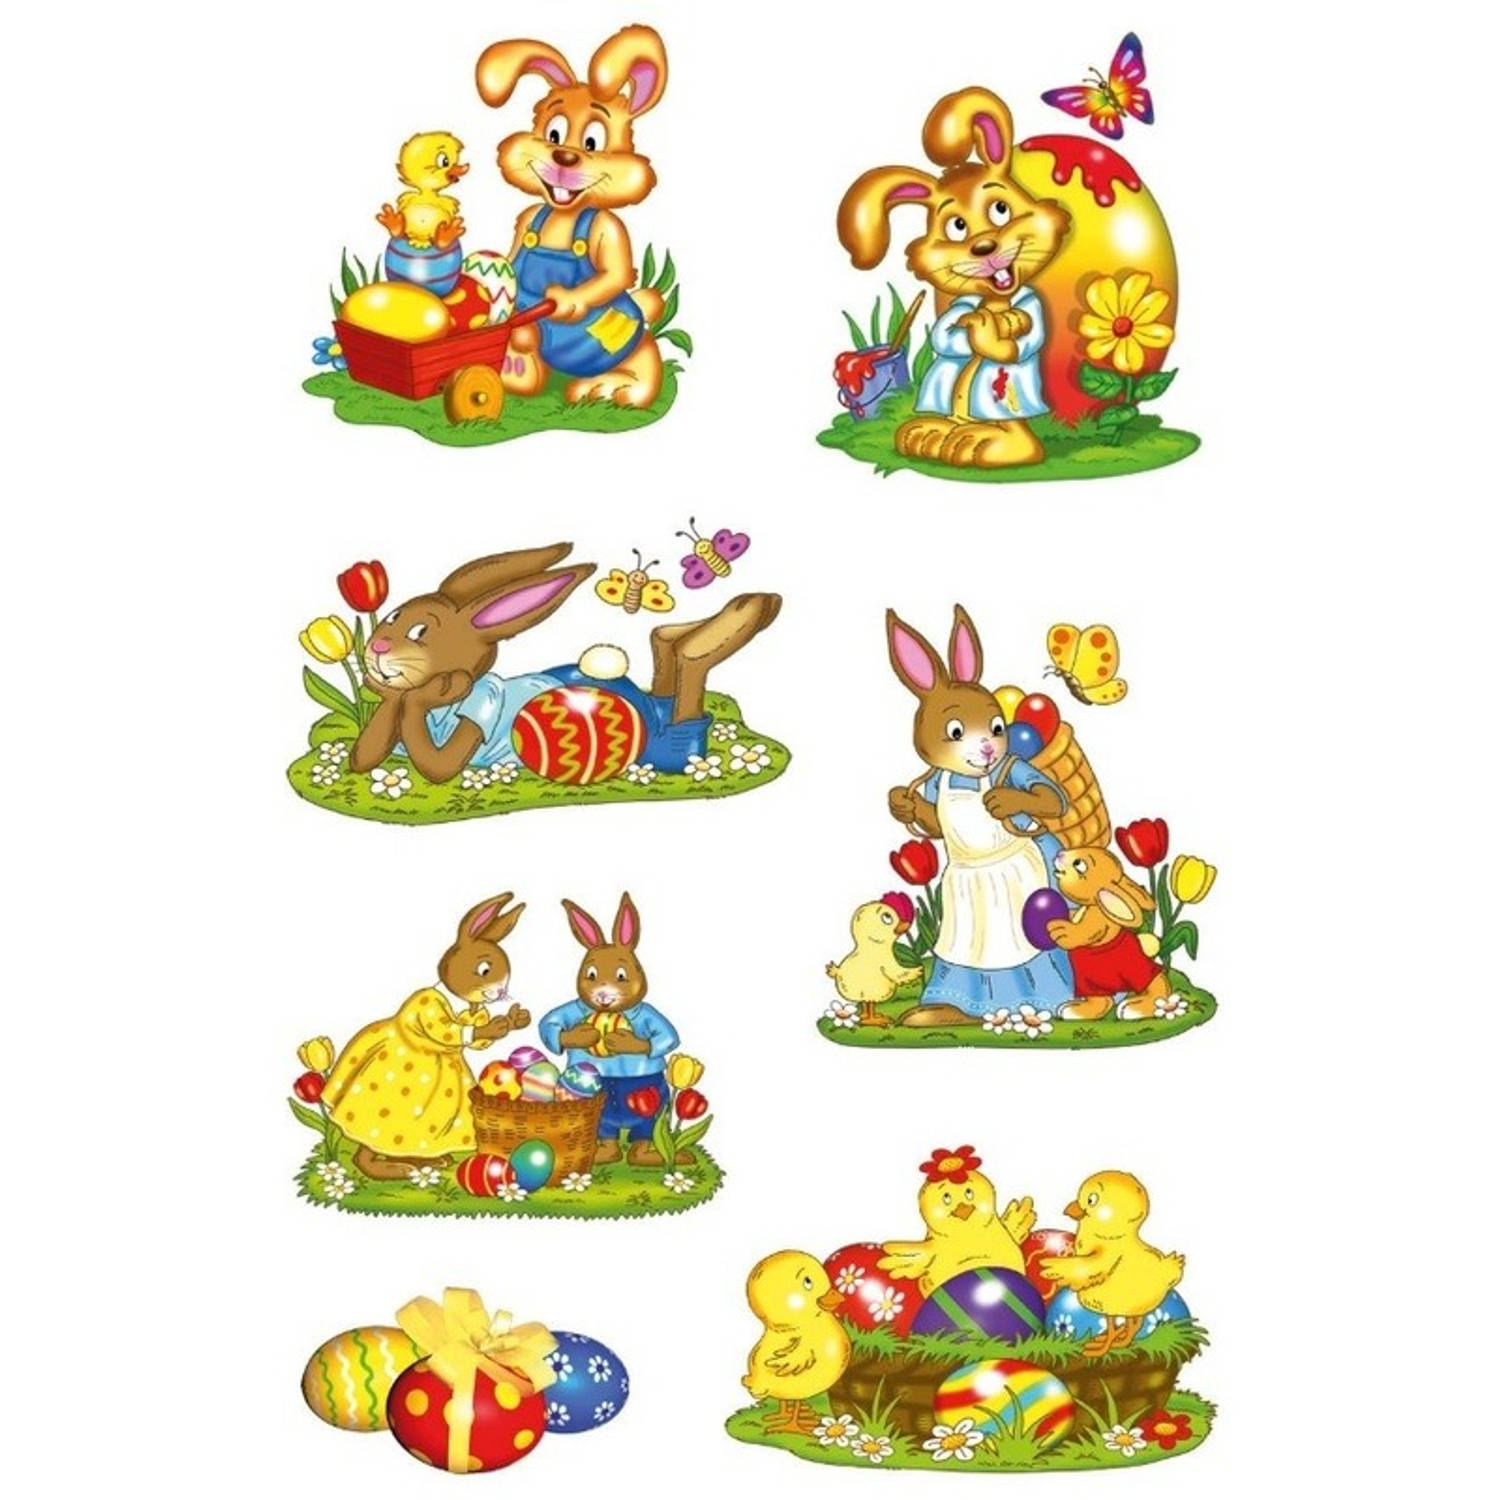 14x Paashazen/konijnen Stickers Met Glitter Effect - Kinderstickers - Stickervellen - Knutselspullen